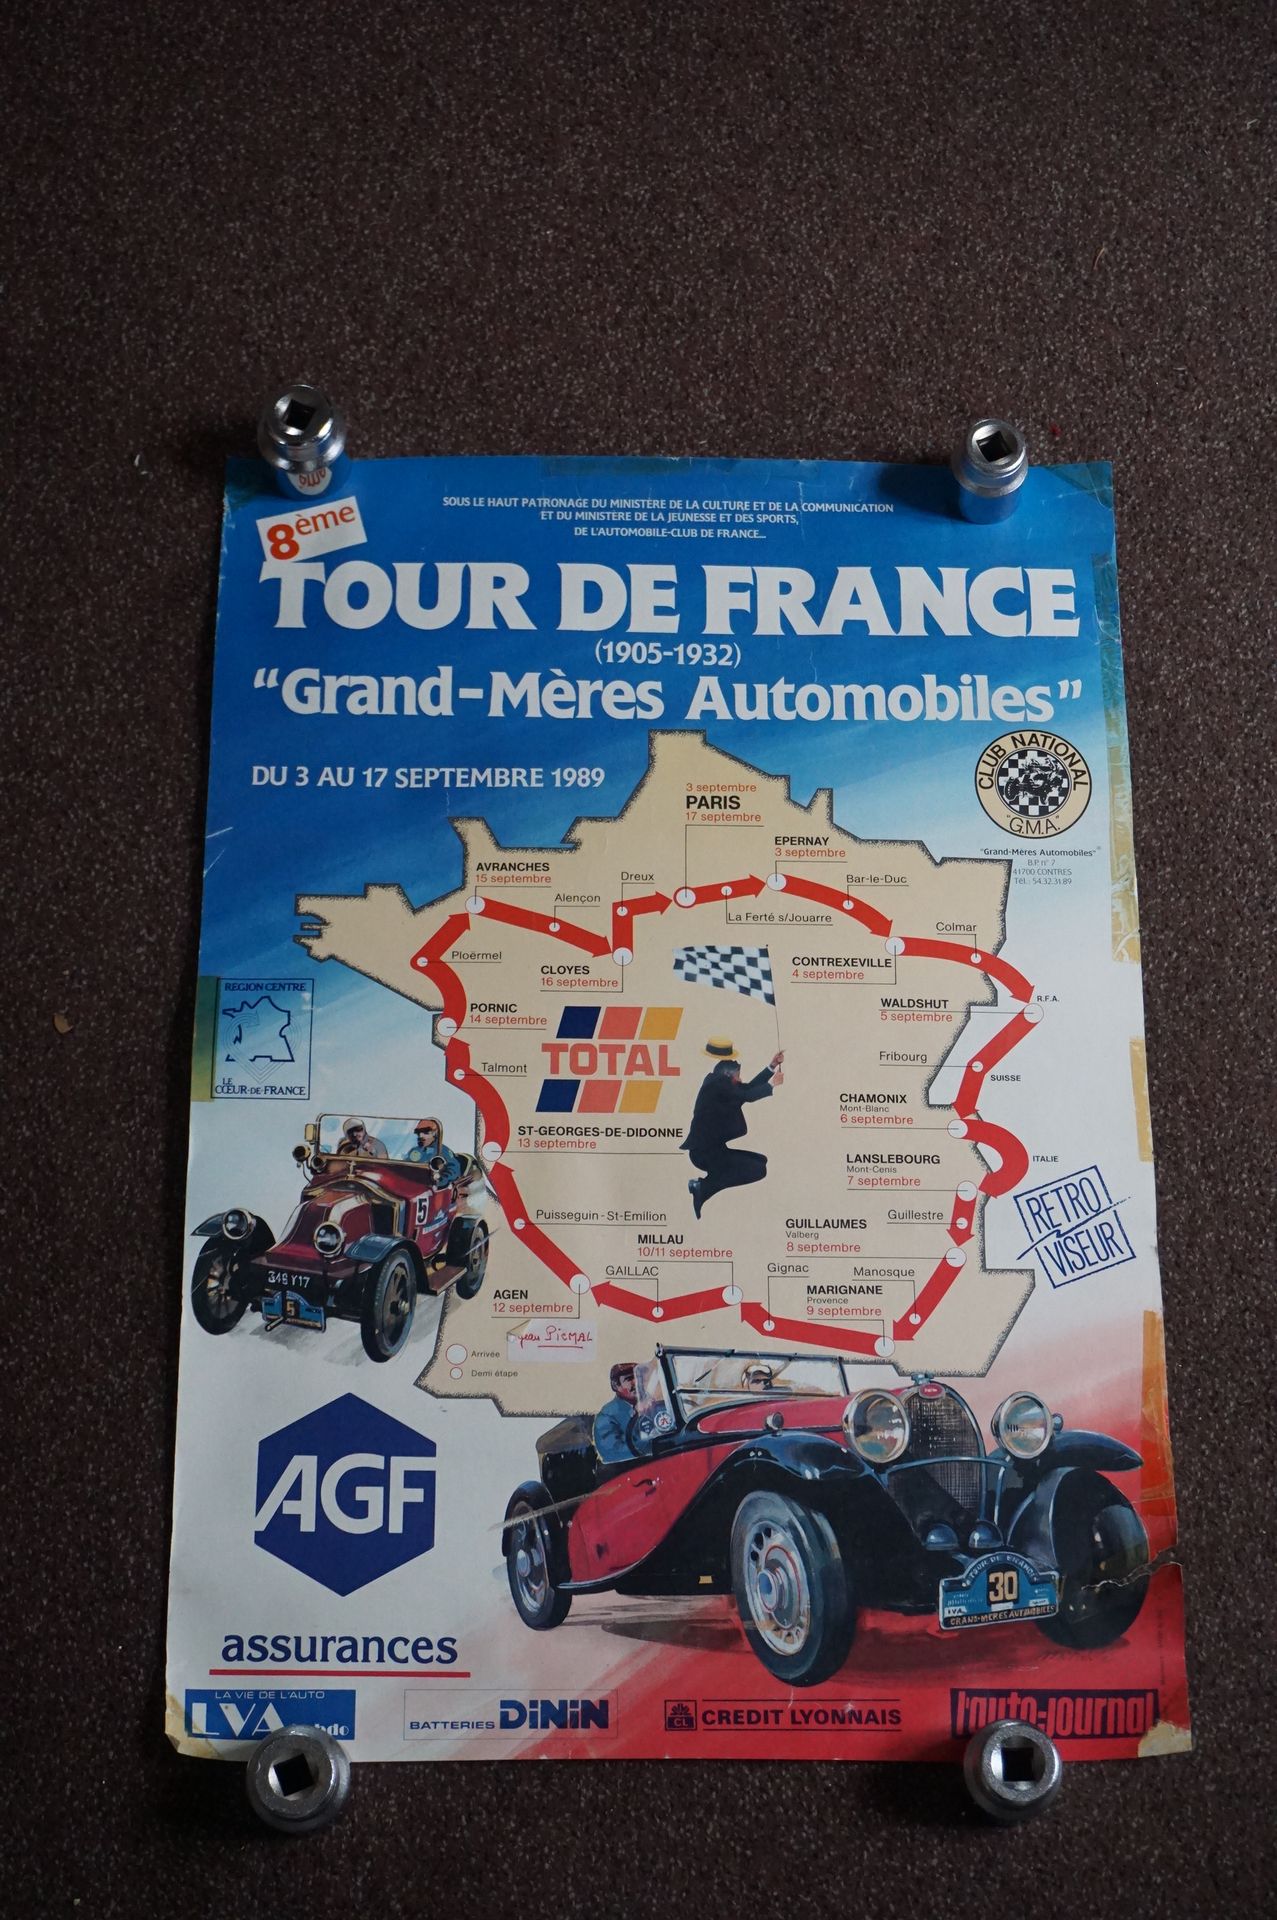 Null Poster "8. Tour de France der Großmütter 
Automobiles"